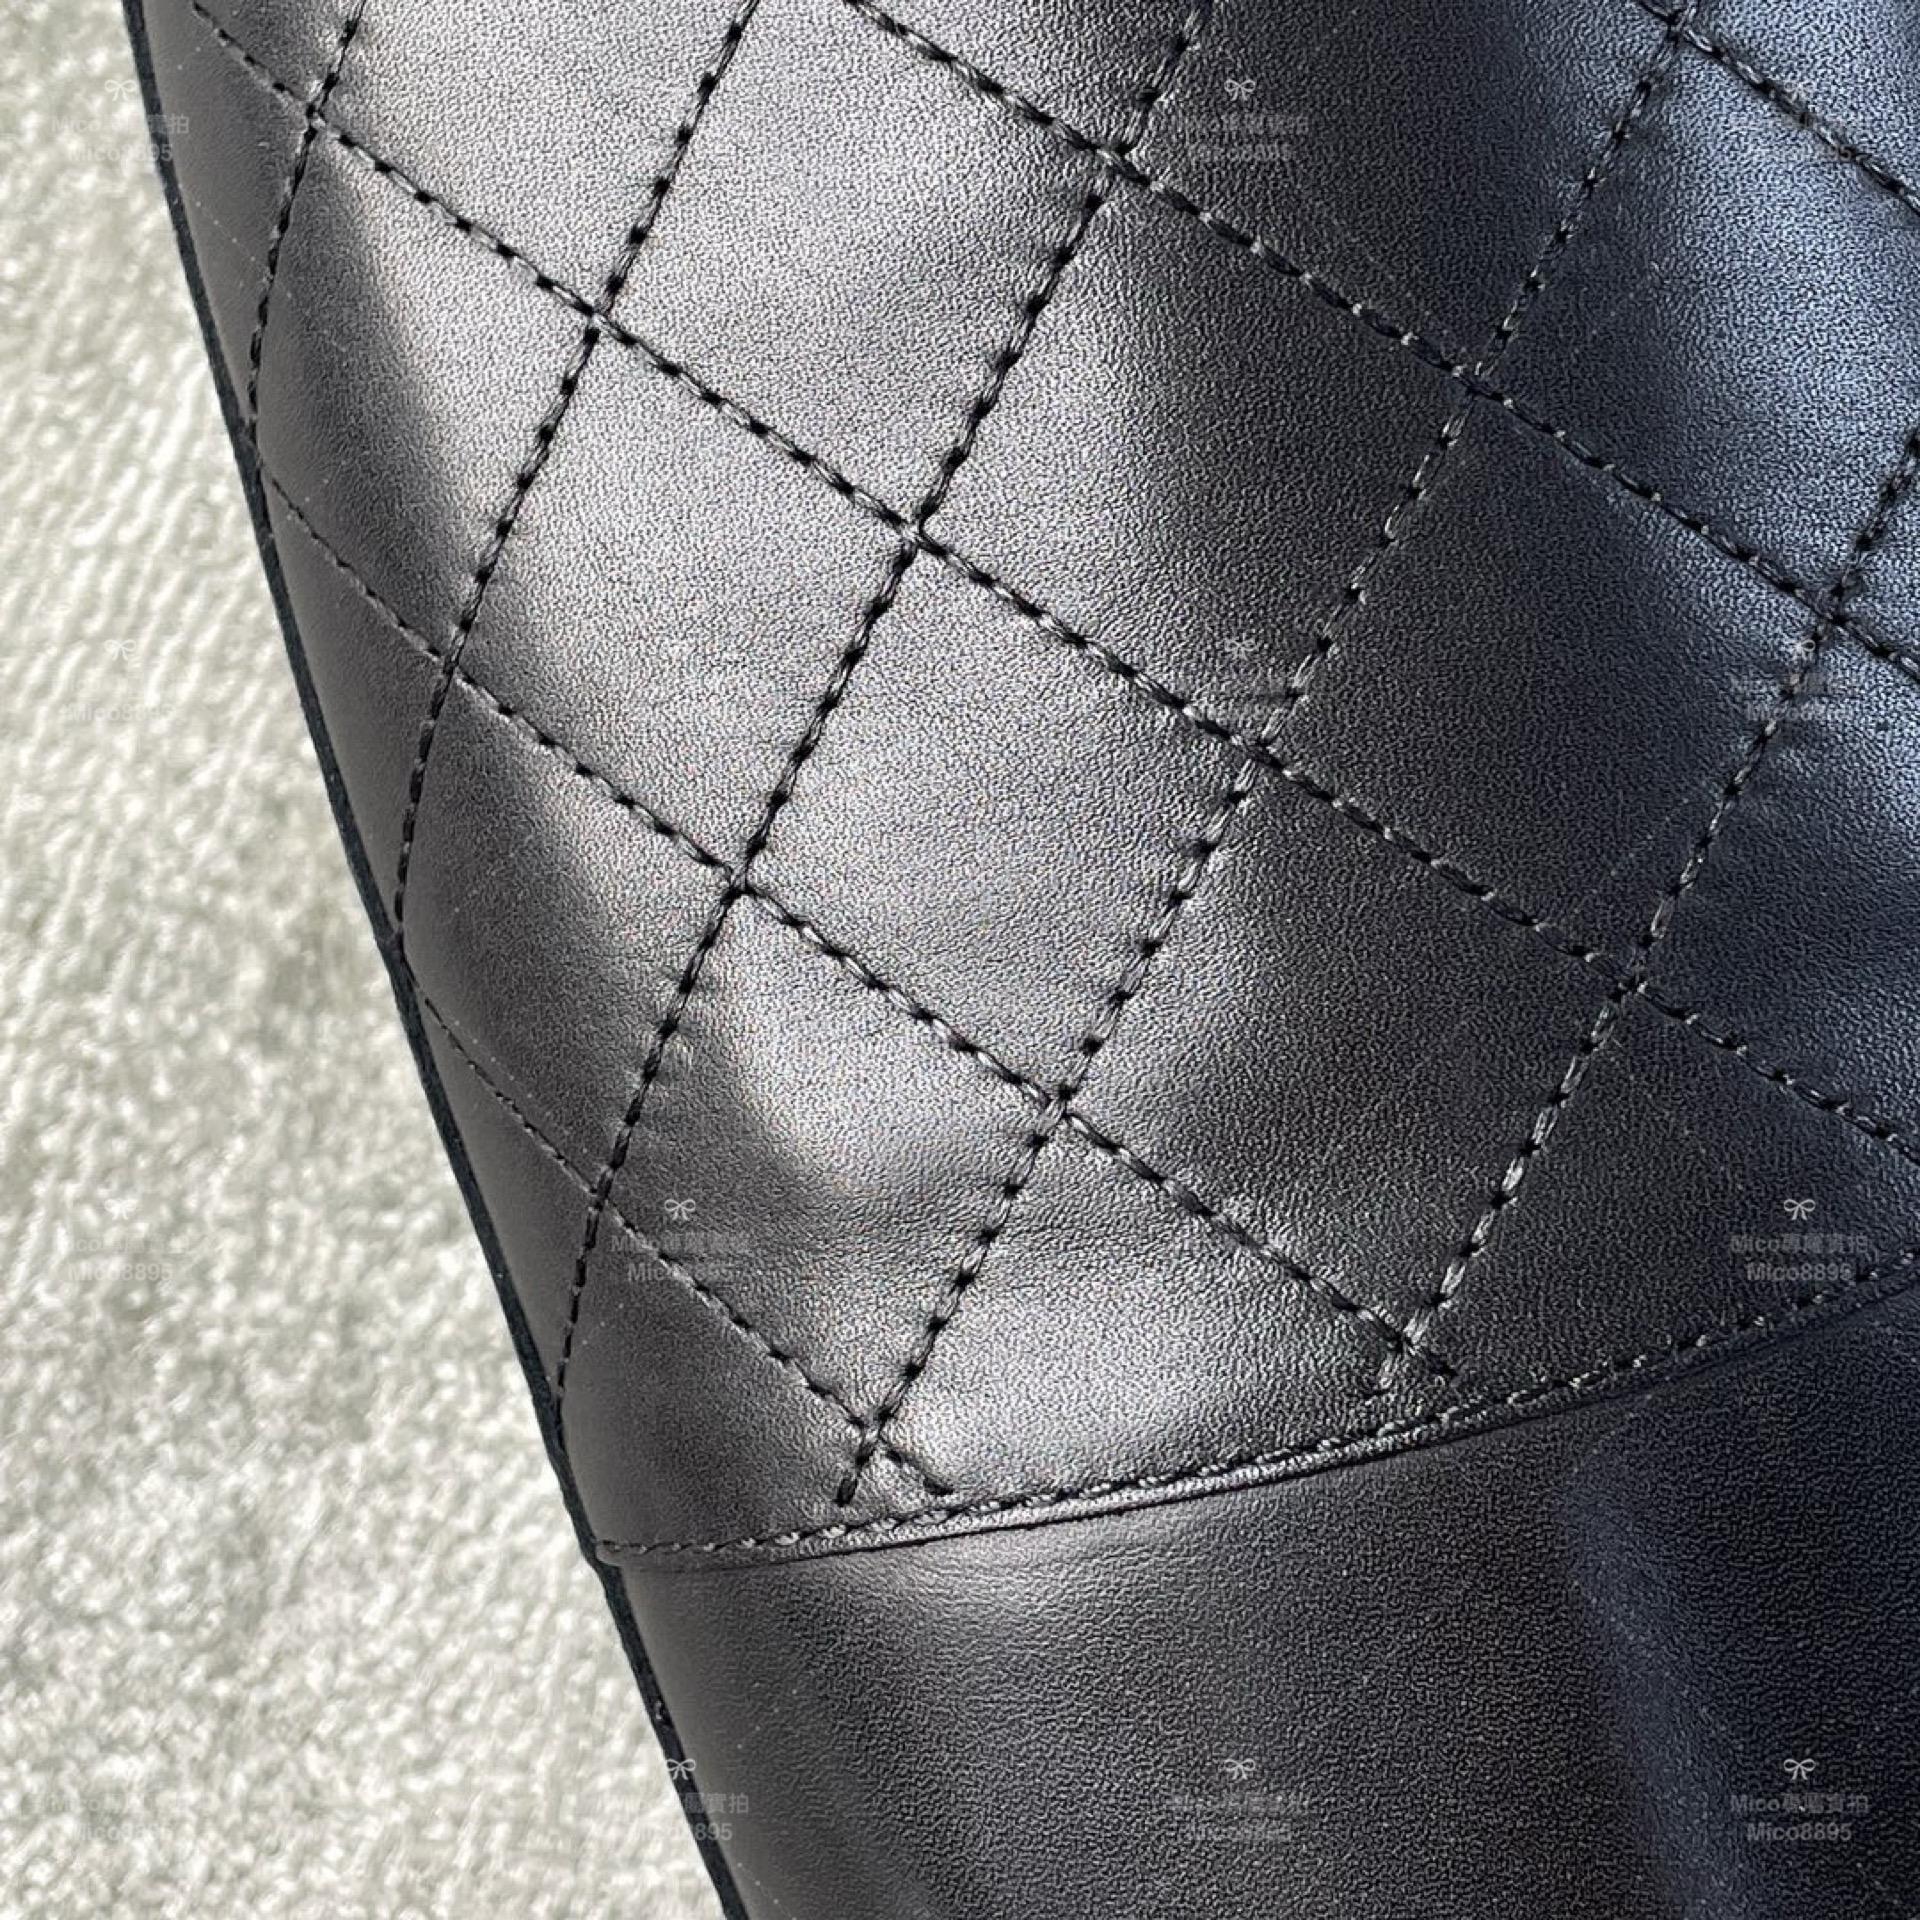 Chanel 菱格紋雙C直筒長靴/小牛皮/ 英倫風格 SIZE 35-39(可訂製40）